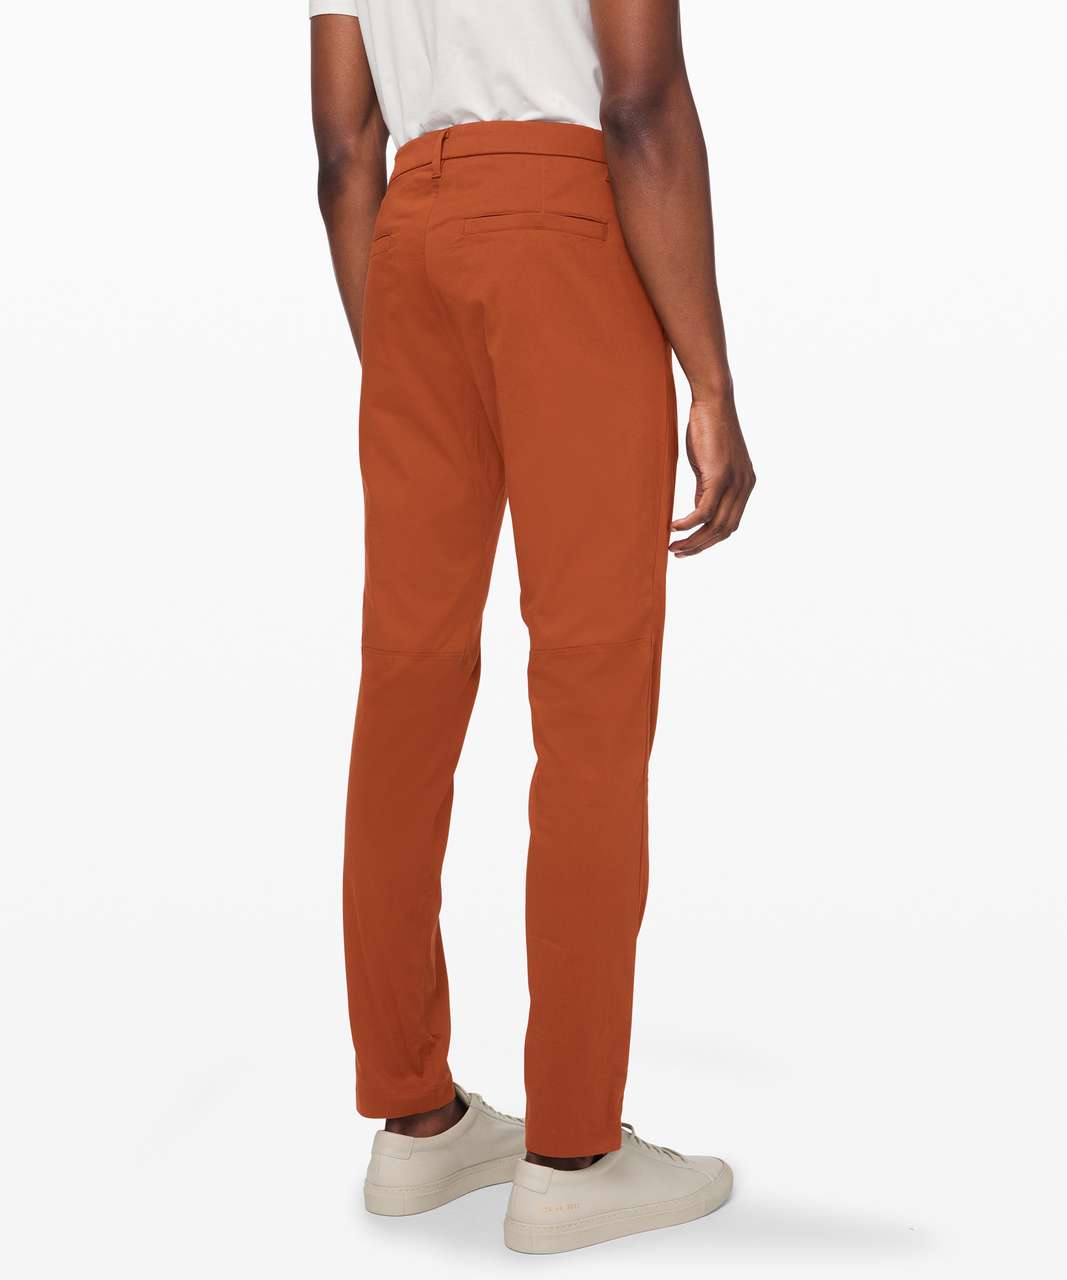 Textured Silk Carrot Pants - Men - OBSOLETES DO NOT TOUCH